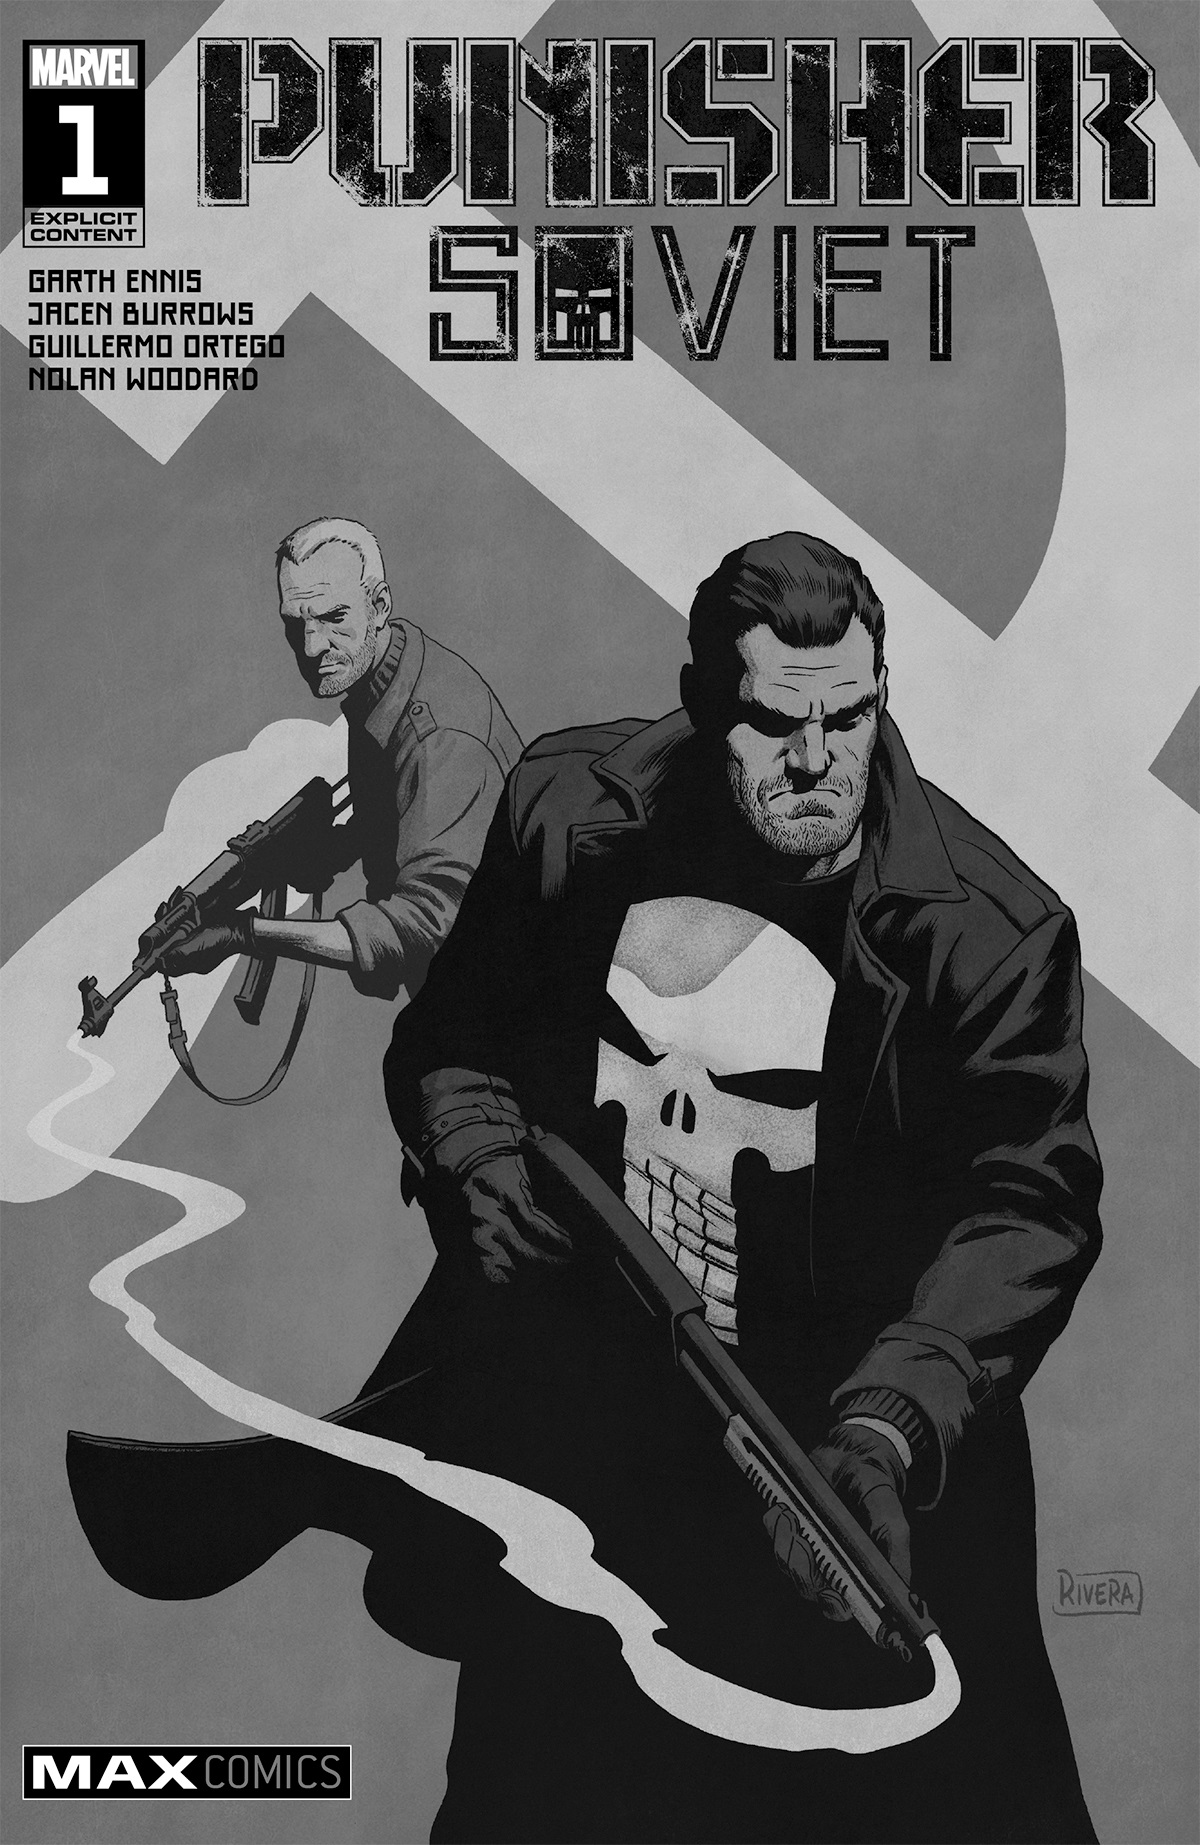 Punisher: Soviet (2019) #1